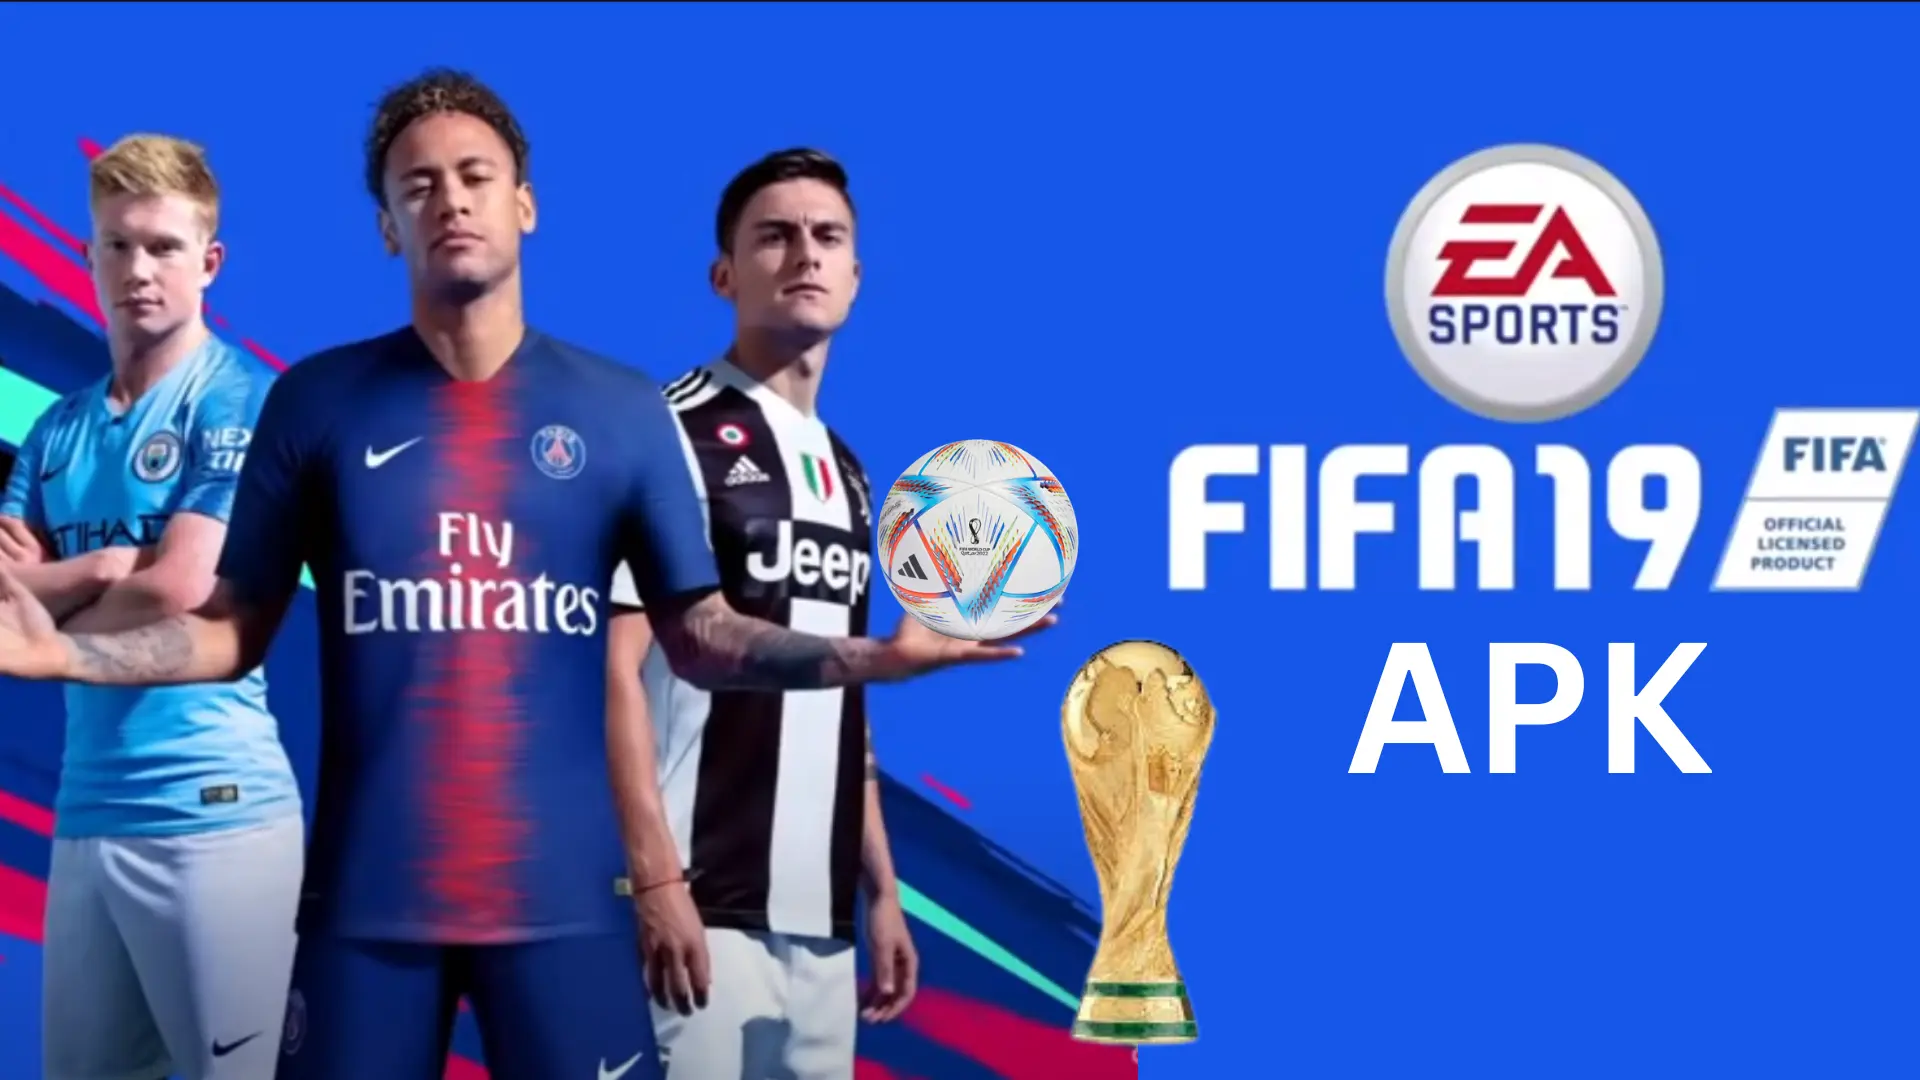 EA Sports FC Mobile: como fazer download do 'novo FIFA' no Android e iPhone